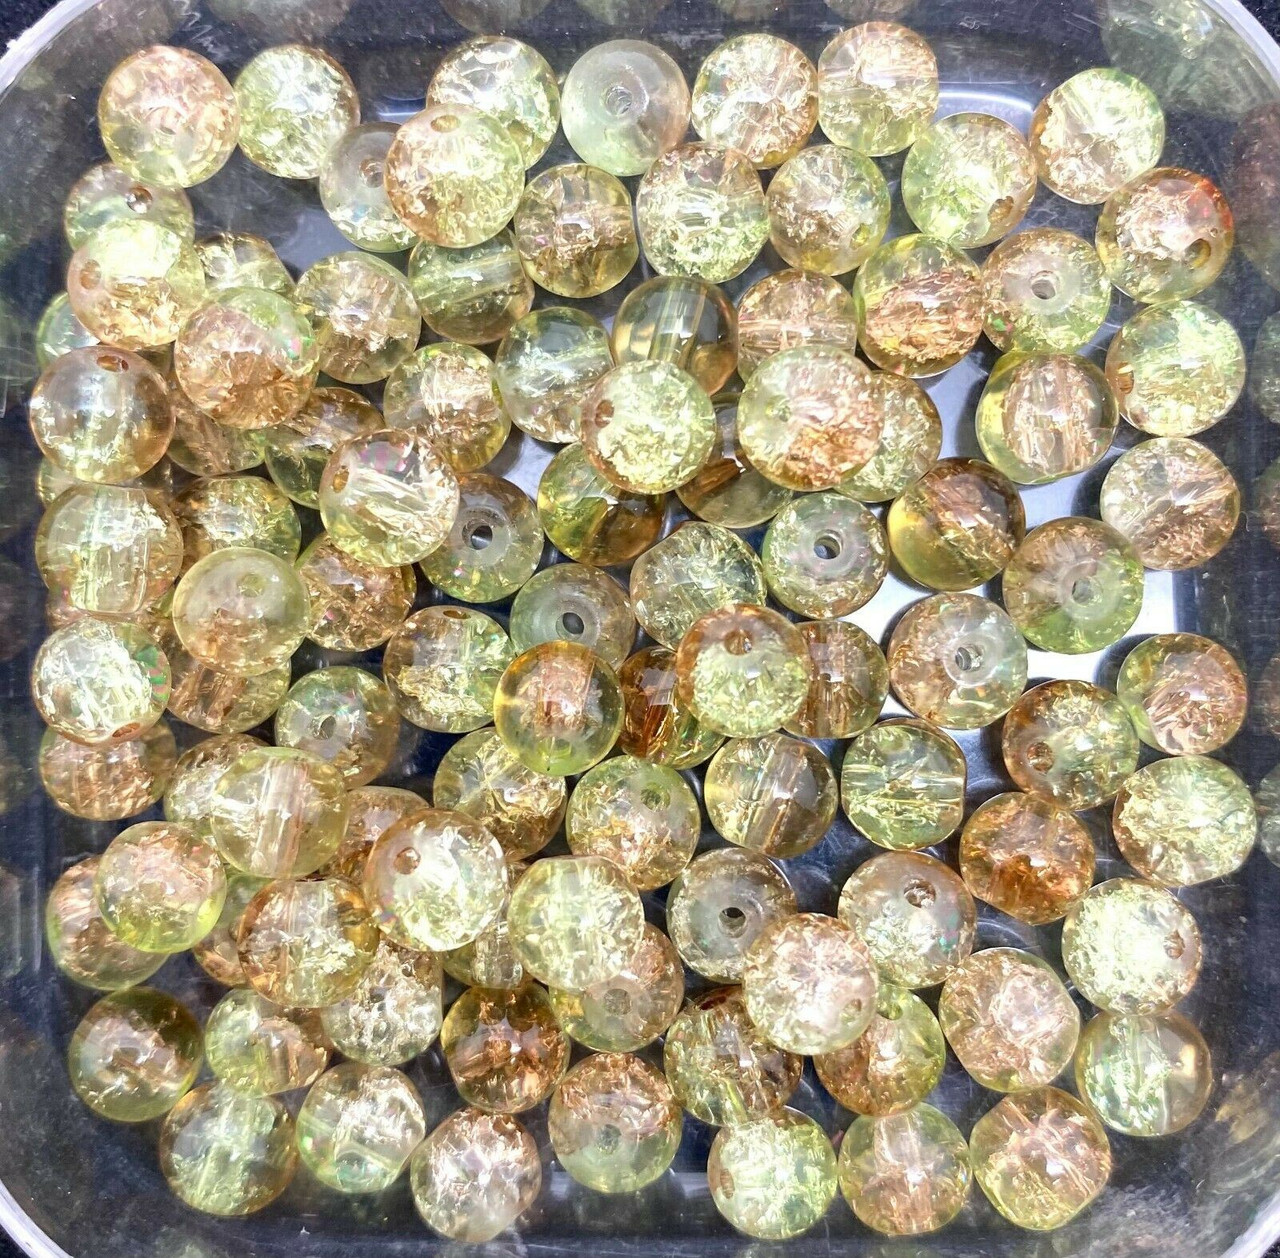 8mm Crackle Glass Beads - Copper & Light Green, 50 beads